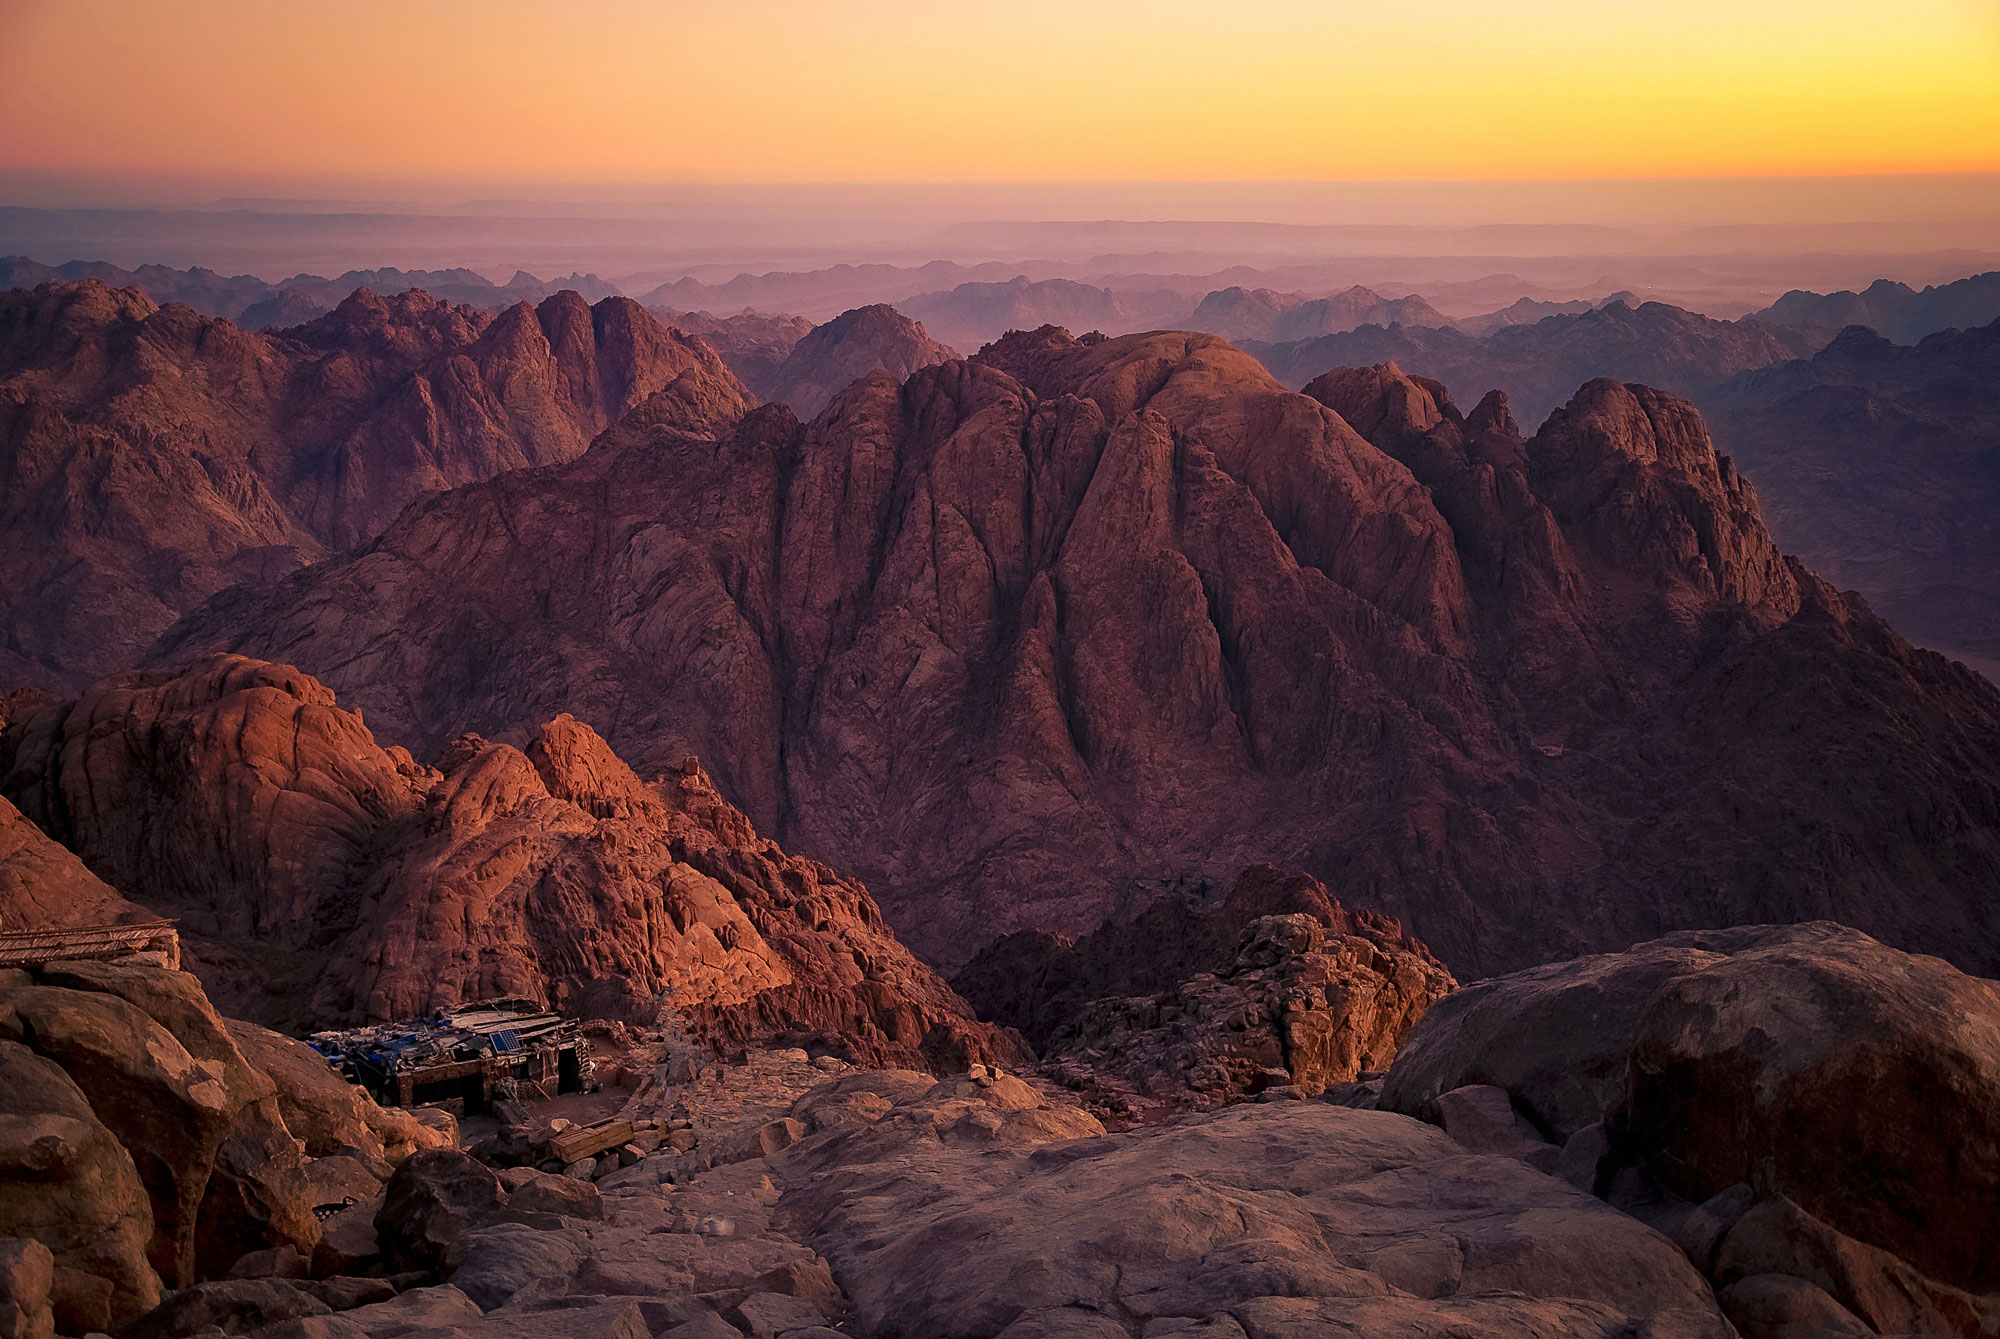 Jebel Musa (2285m) in the Sinai Peninsula of Egypt, often thought to be Mt. Sinai. [Photo] Mohammed Moussa, Wikimedia